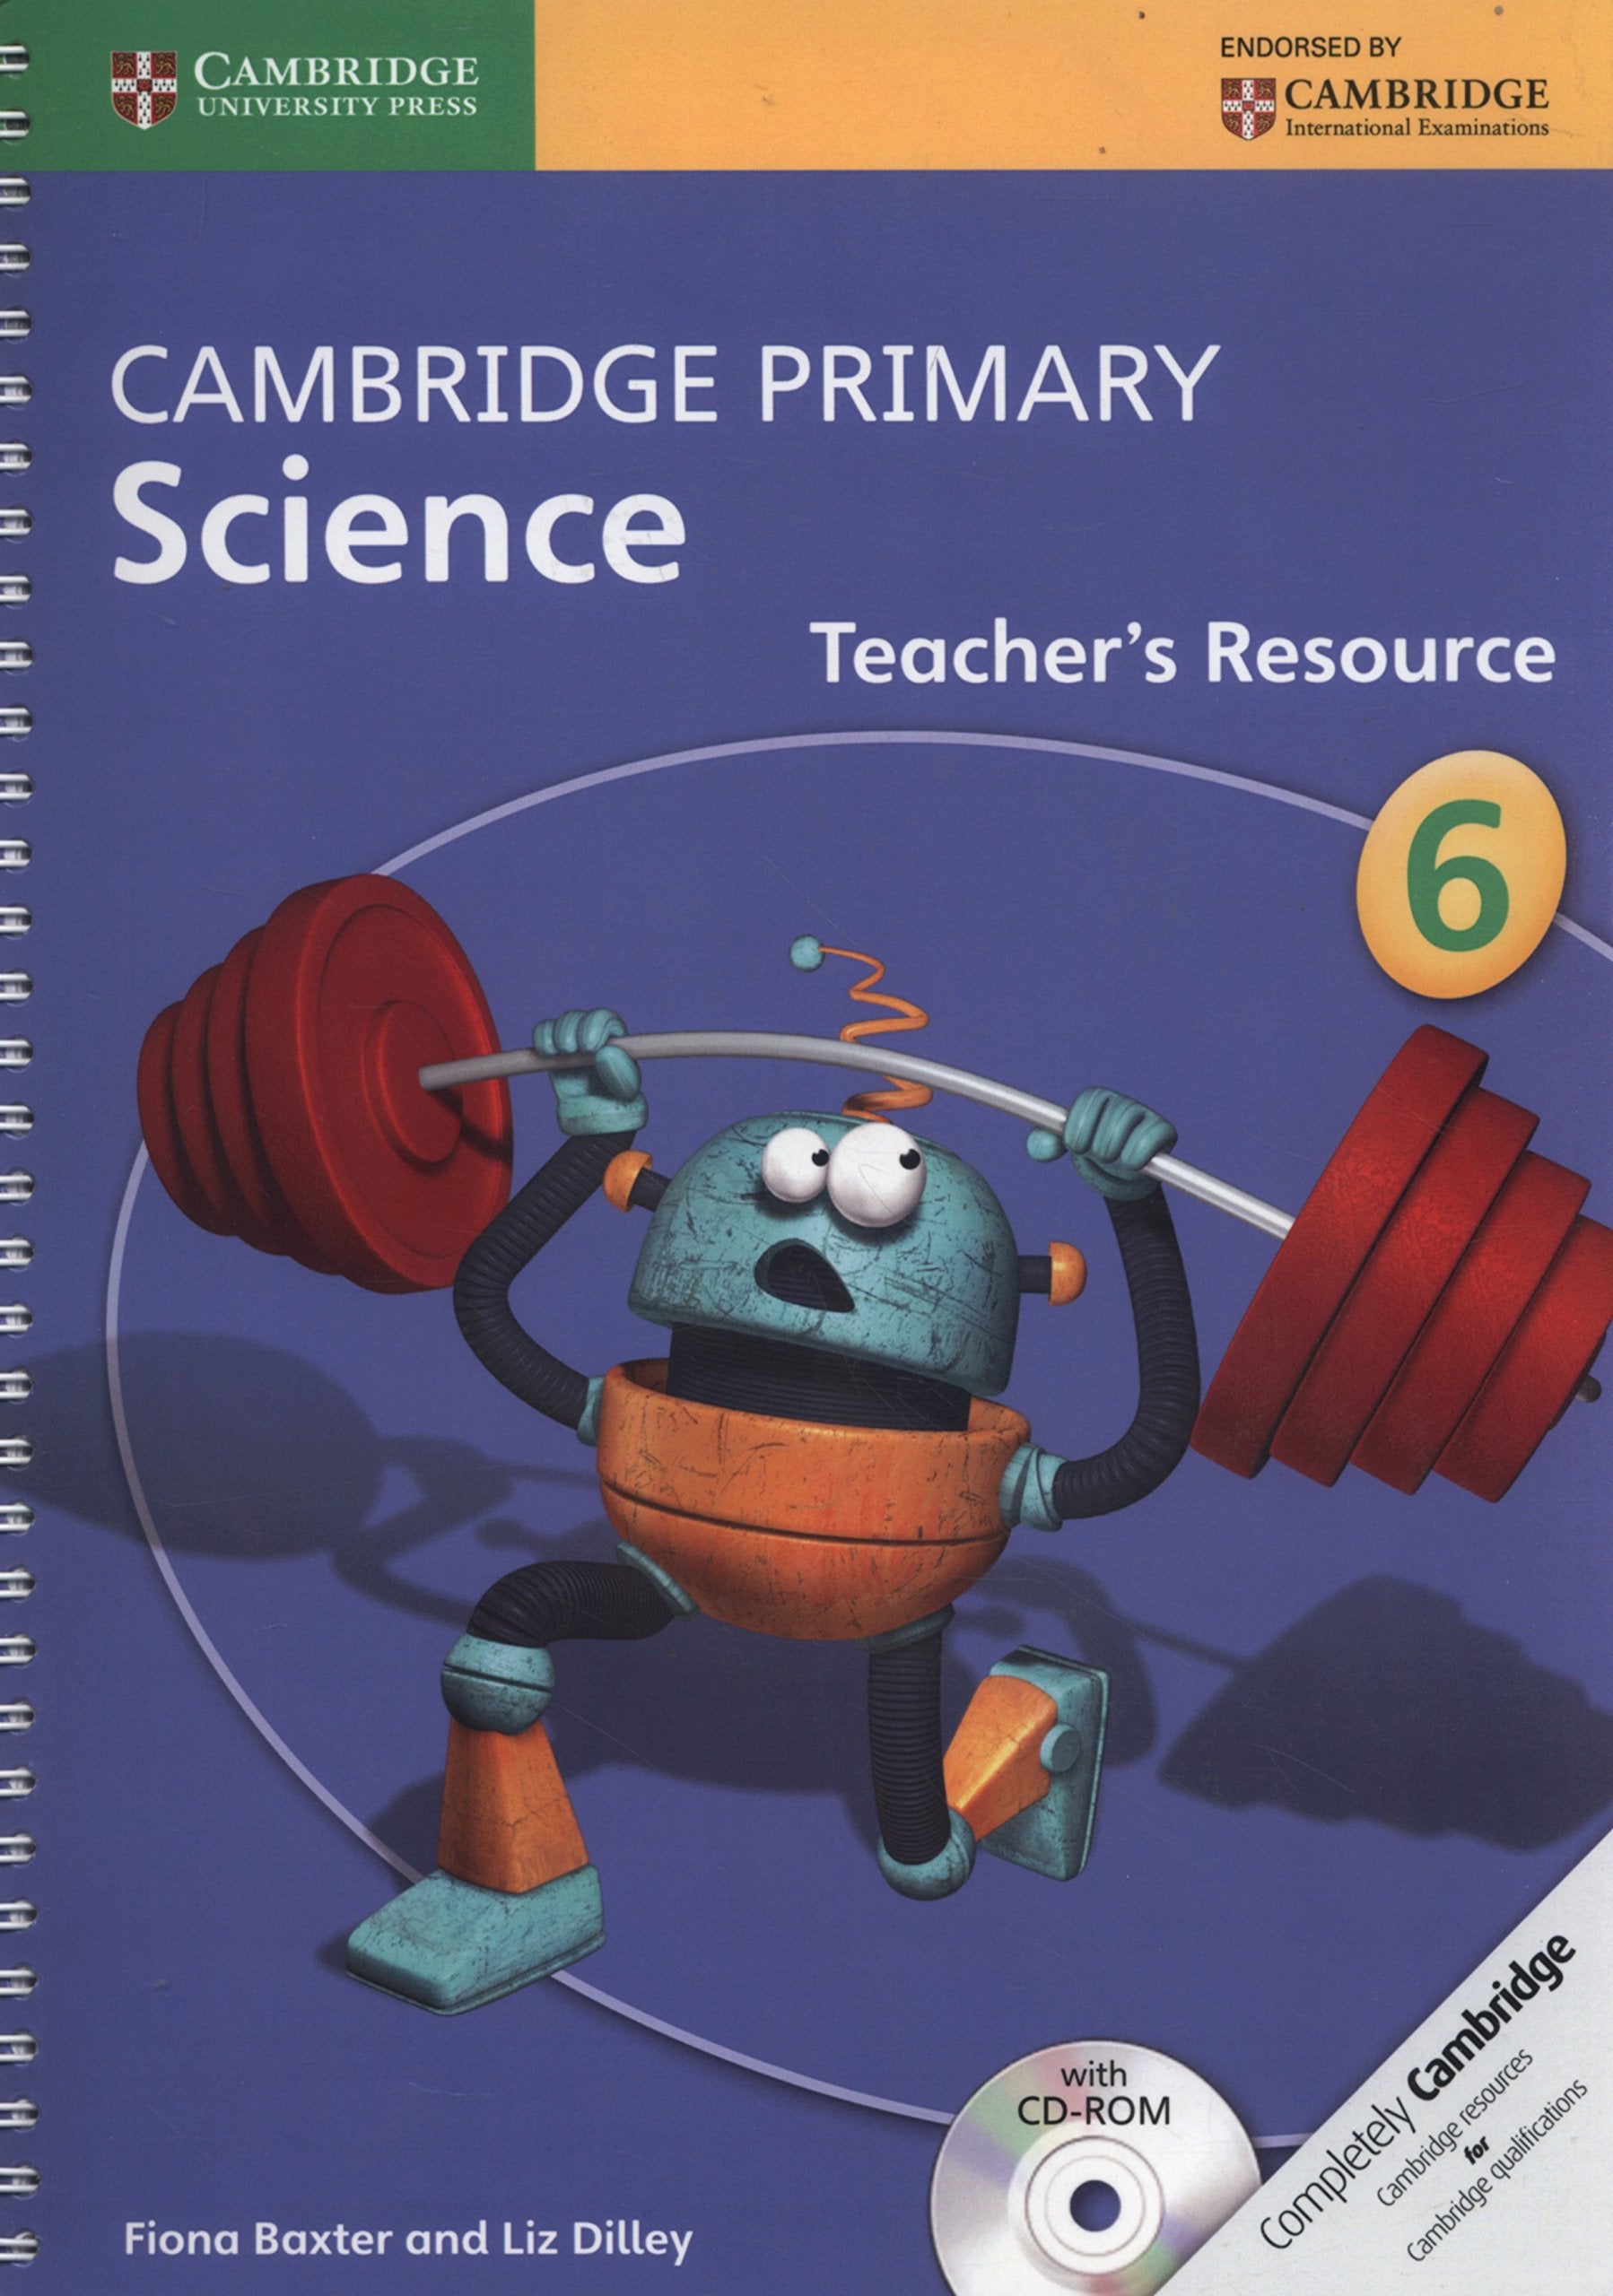 Cambridge Primary Science Teachers Resource 6 with CD-ROM